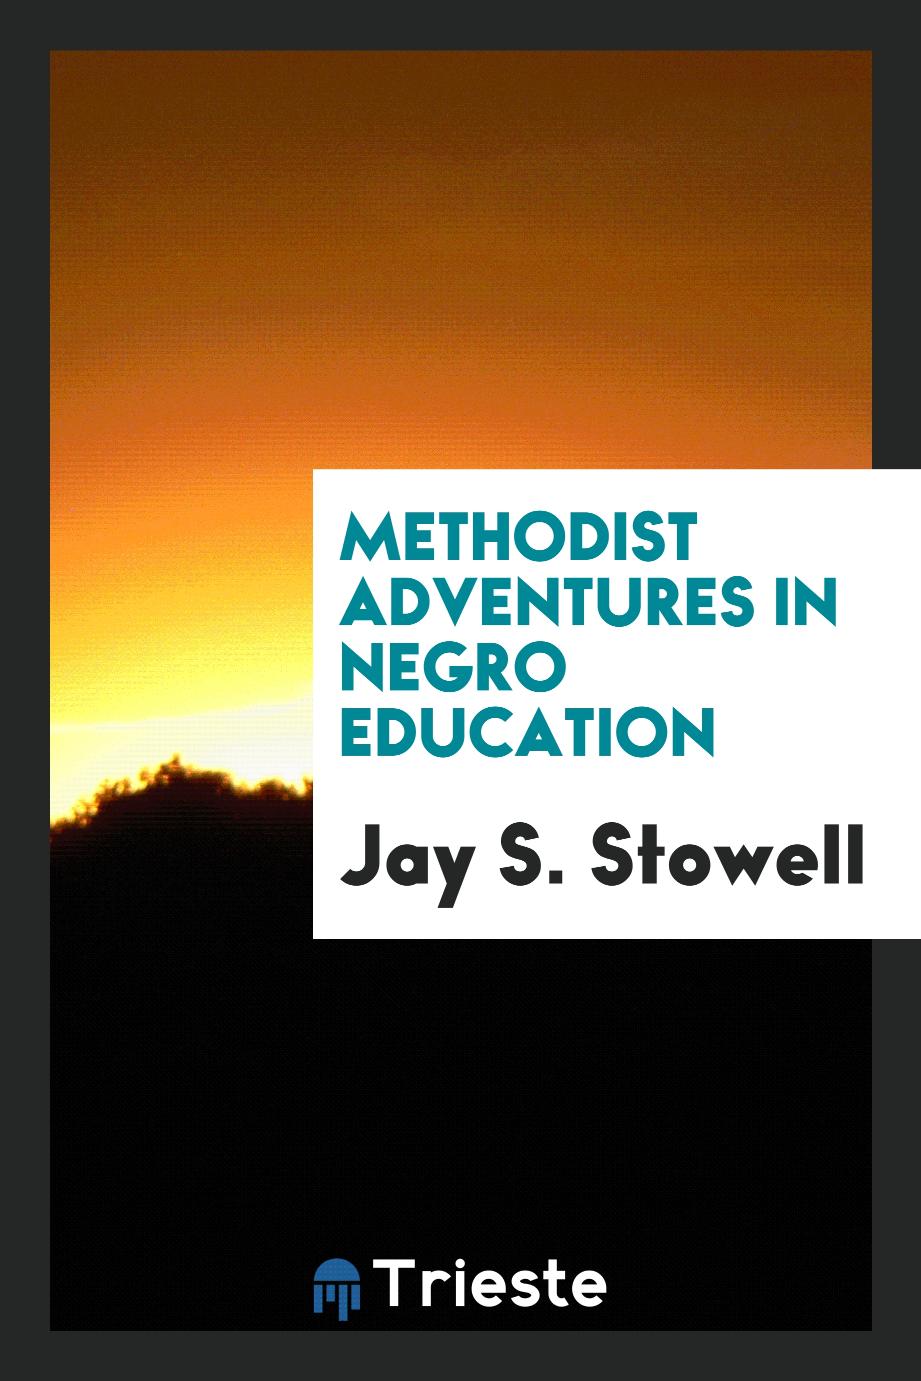 Methodist adventures in negro education